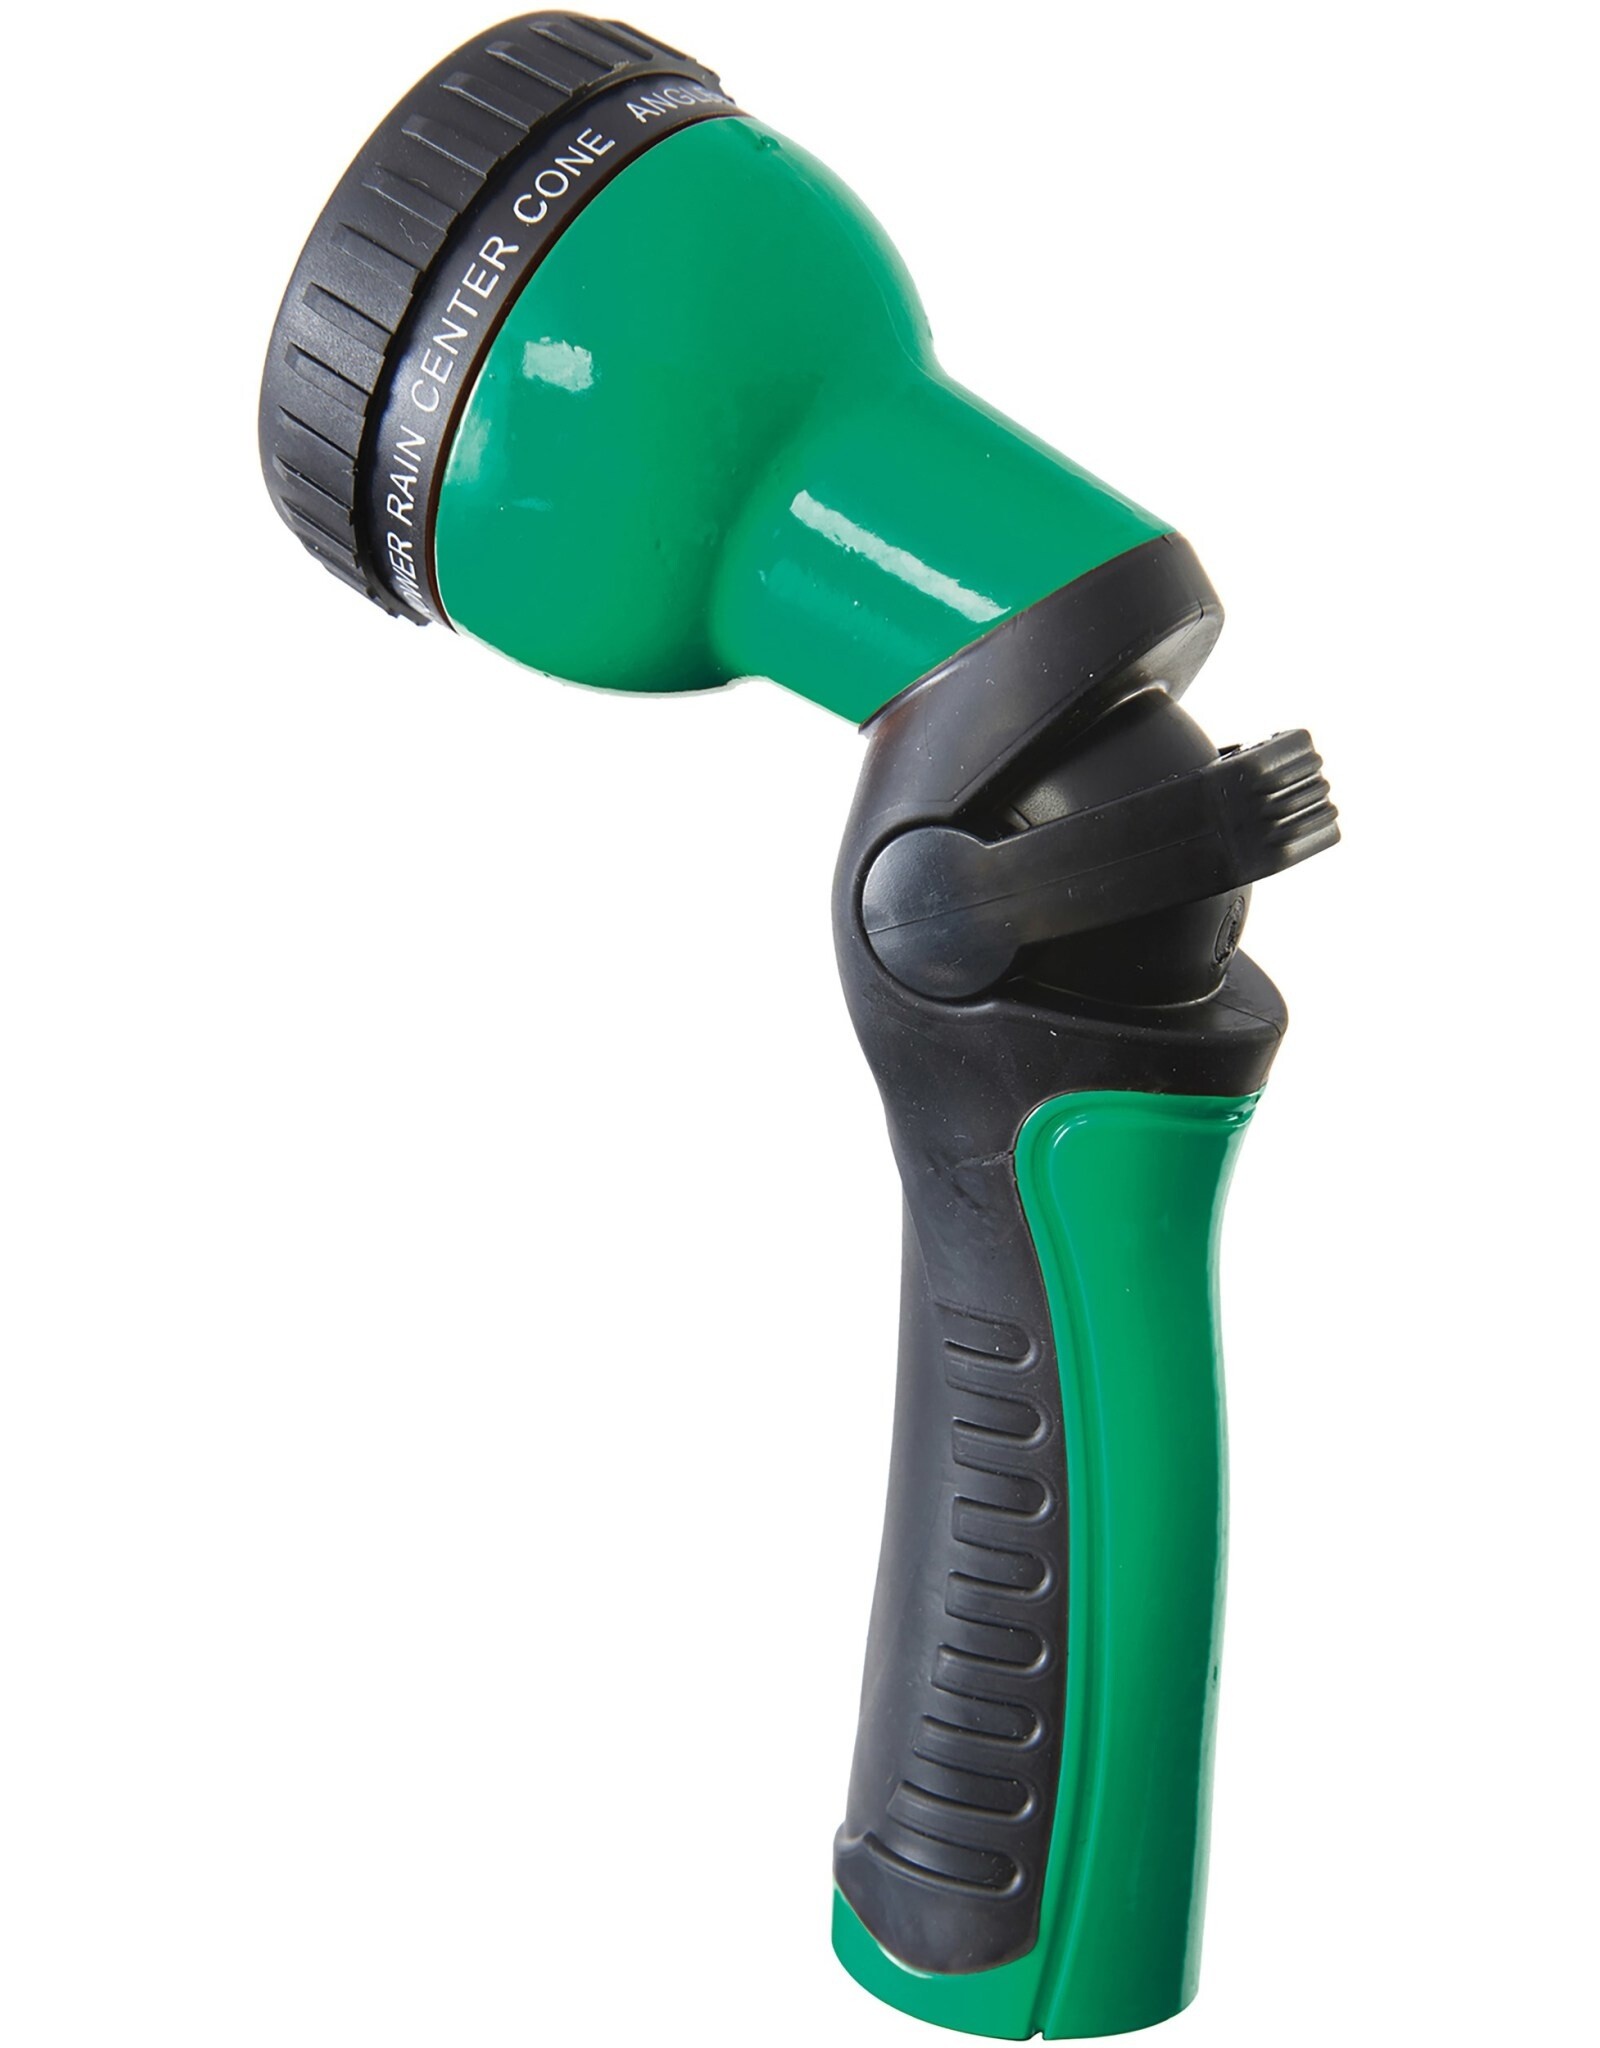 Dramm One Touch™ Revolution™ Spray Gun  - Green - Thumb Control - 9-Pattern Nozzle